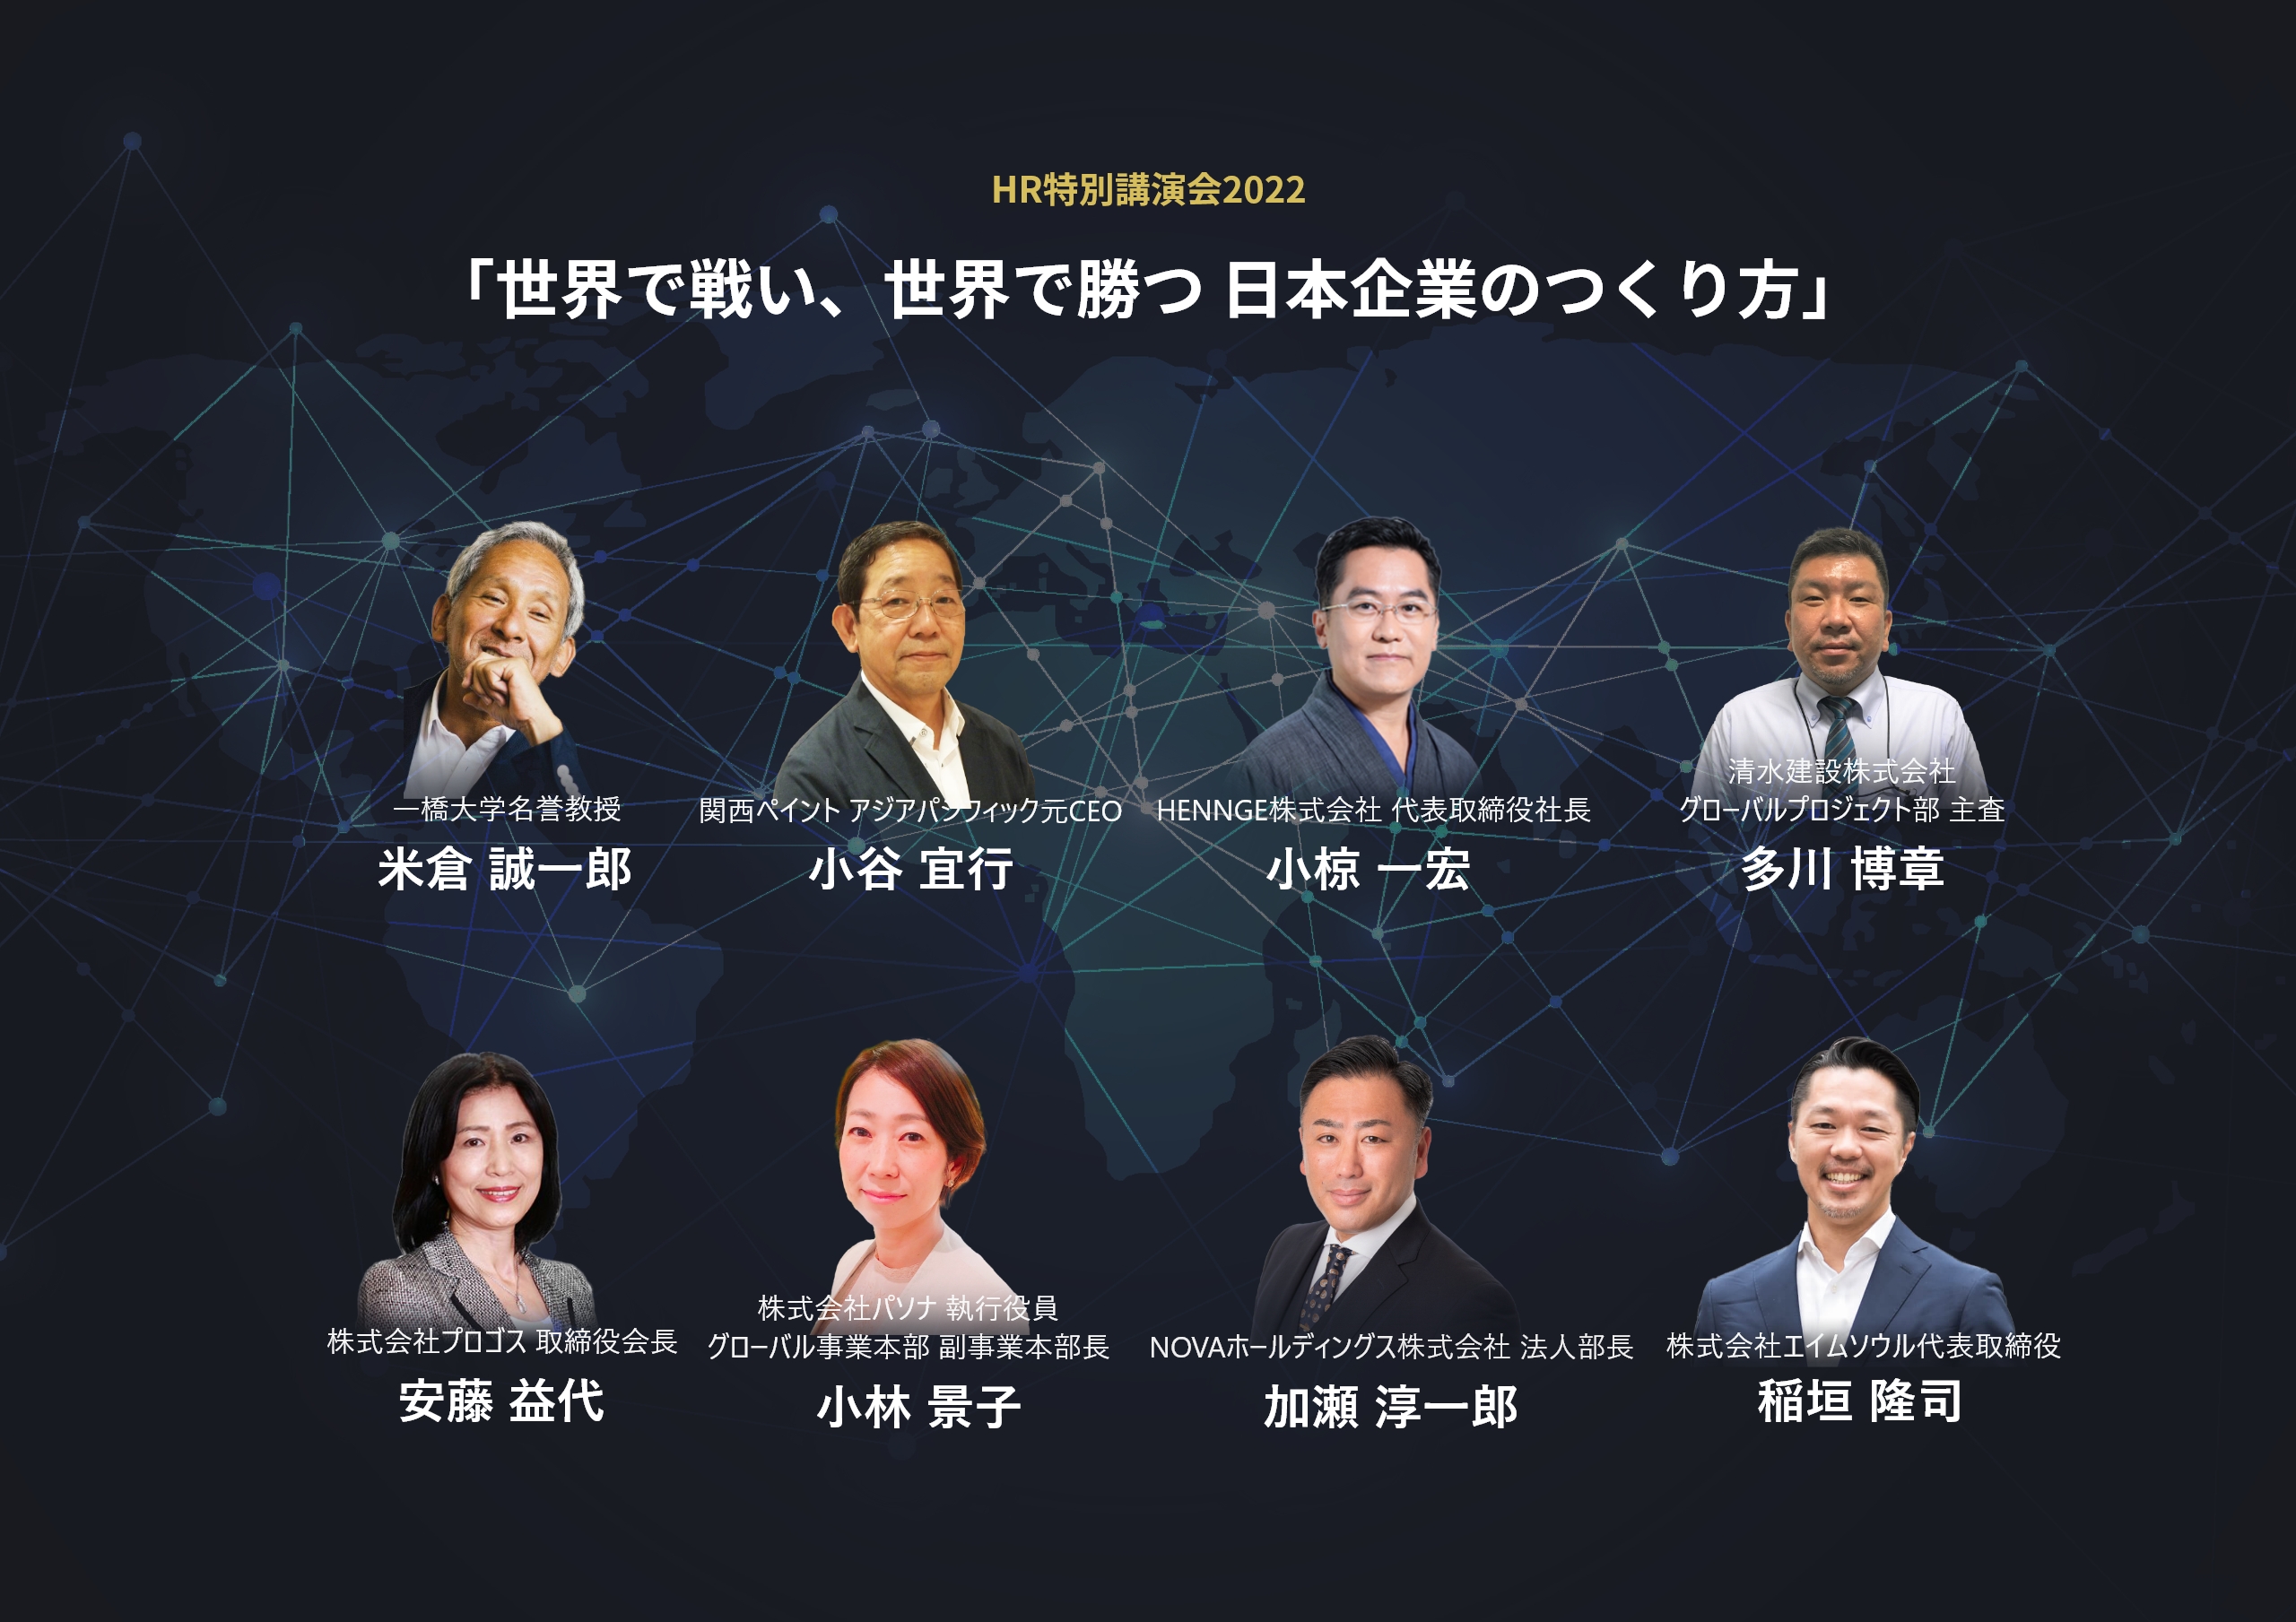 HRテクノロジー大賞 受賞記念セミナー「多様性がもたらす日本企業の革新」